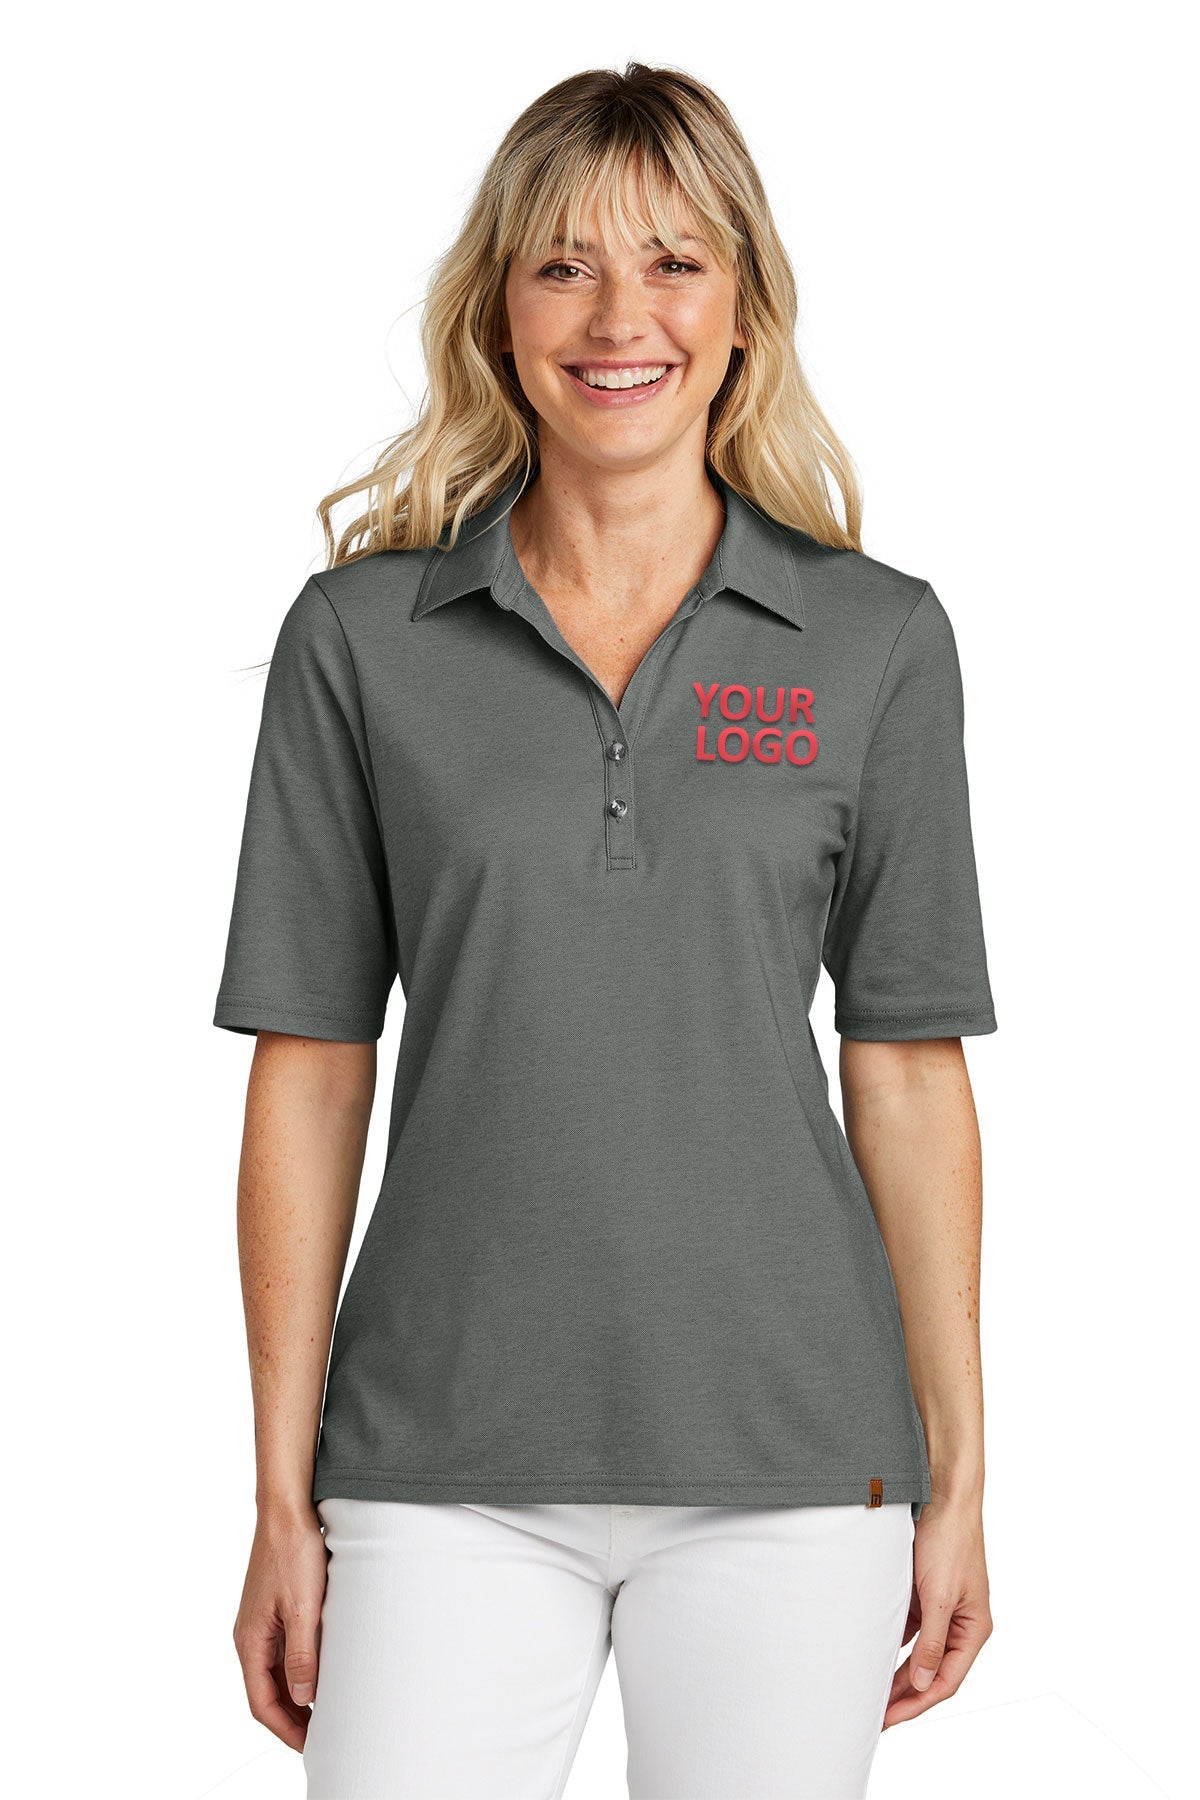 TravisMathew Black Heather TM1LD004 custom logo polo shirts embroidered